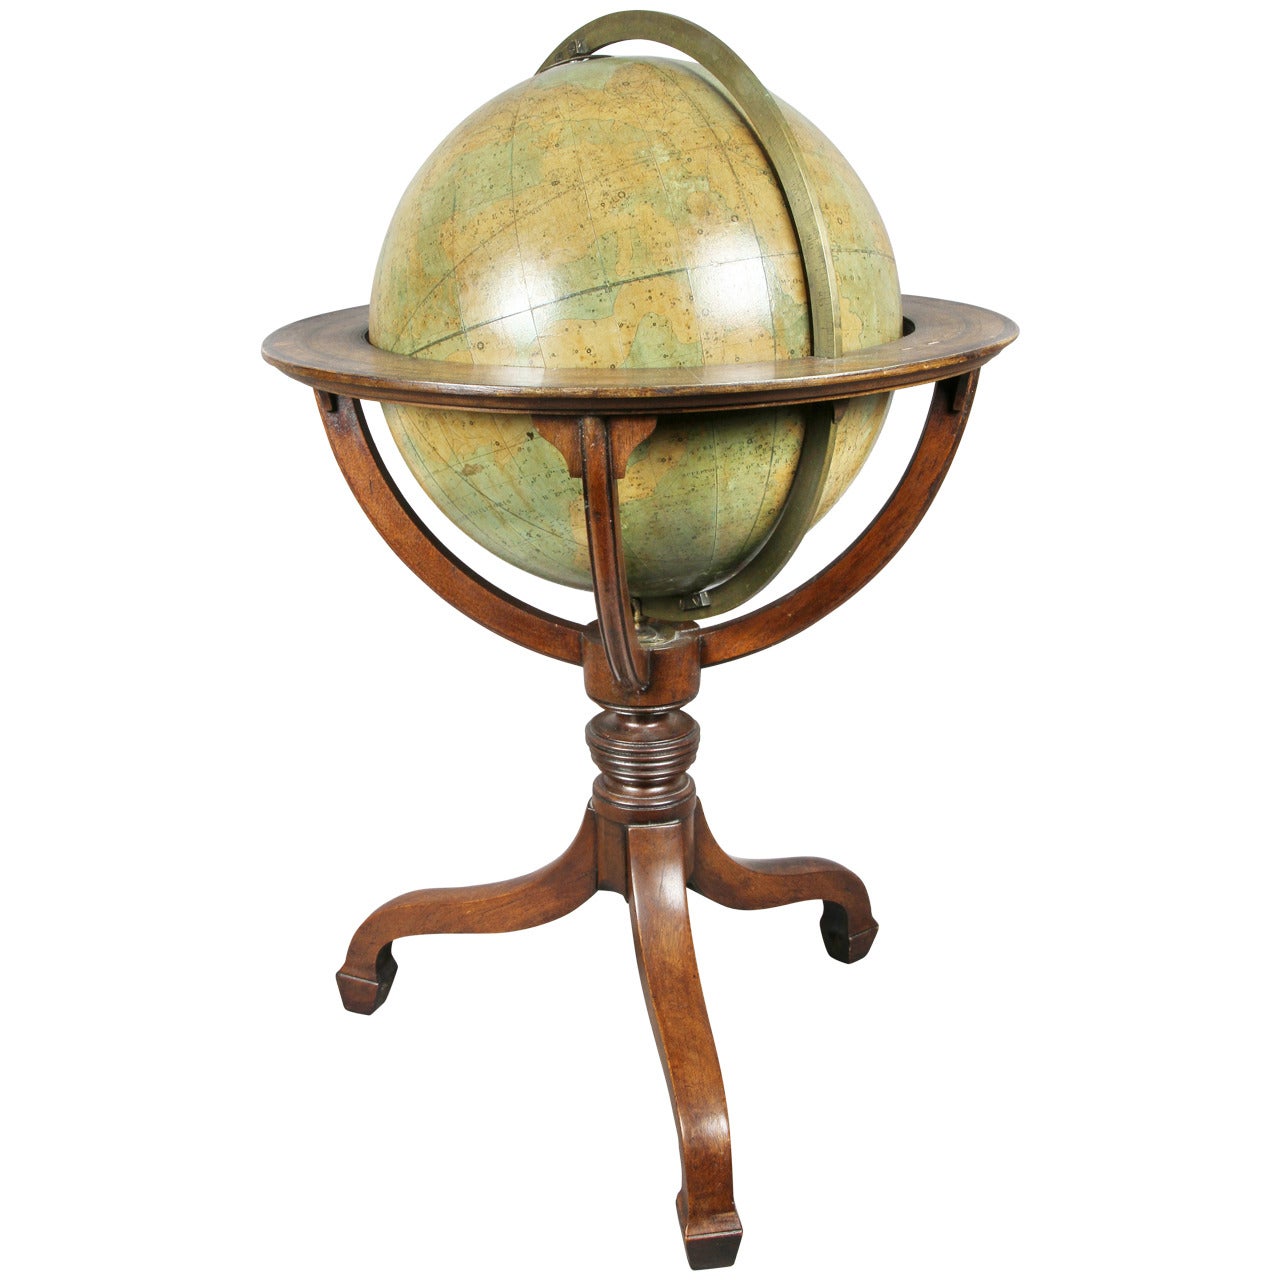 Late Regency Celestrial Table Globe by James Wyld, London